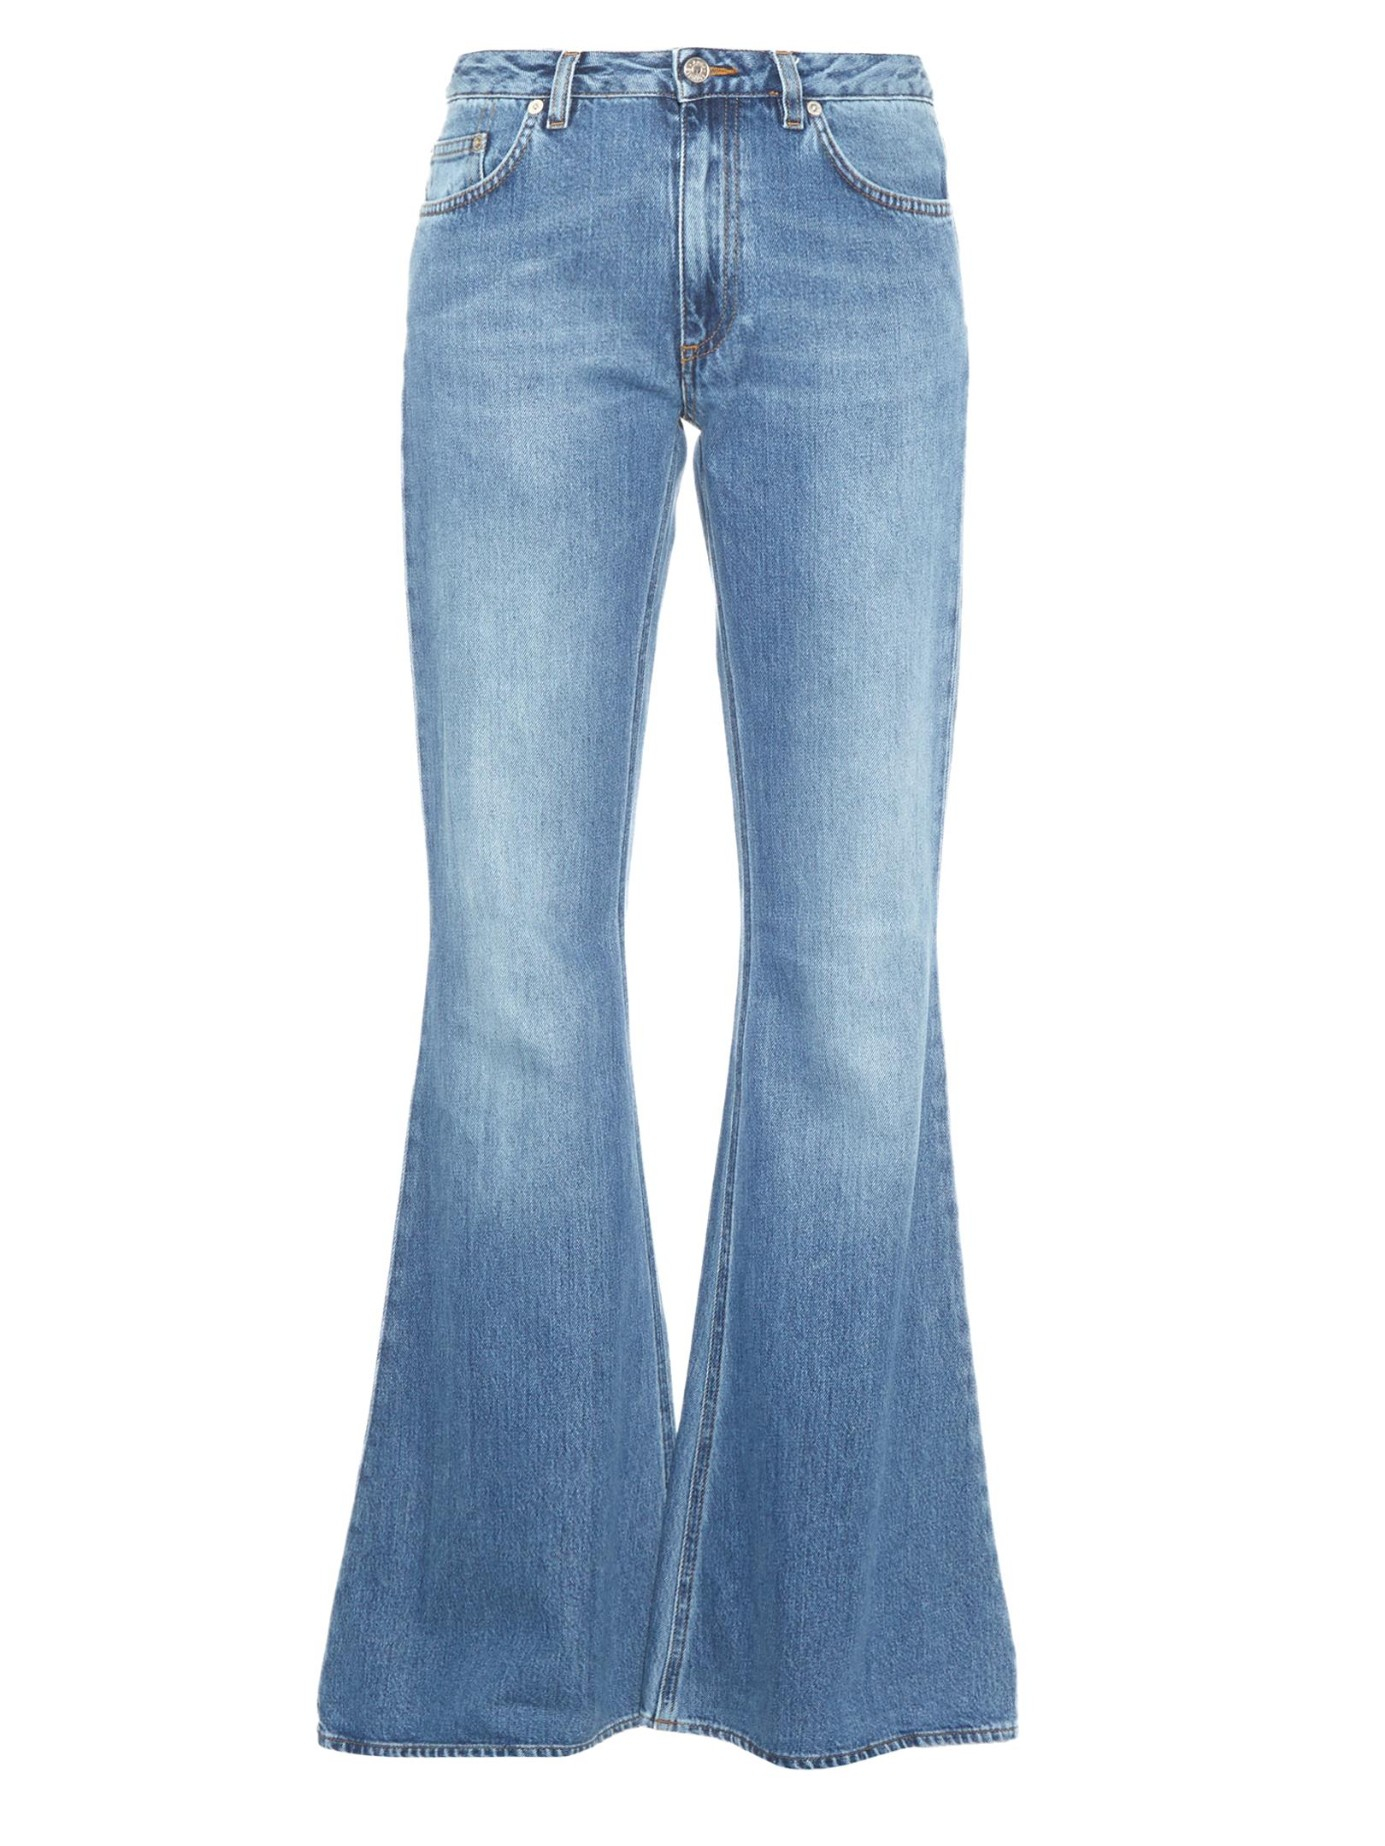 Lyst - Acne Studios Mello Flared-leg Cotton-denim Jeans in Blue